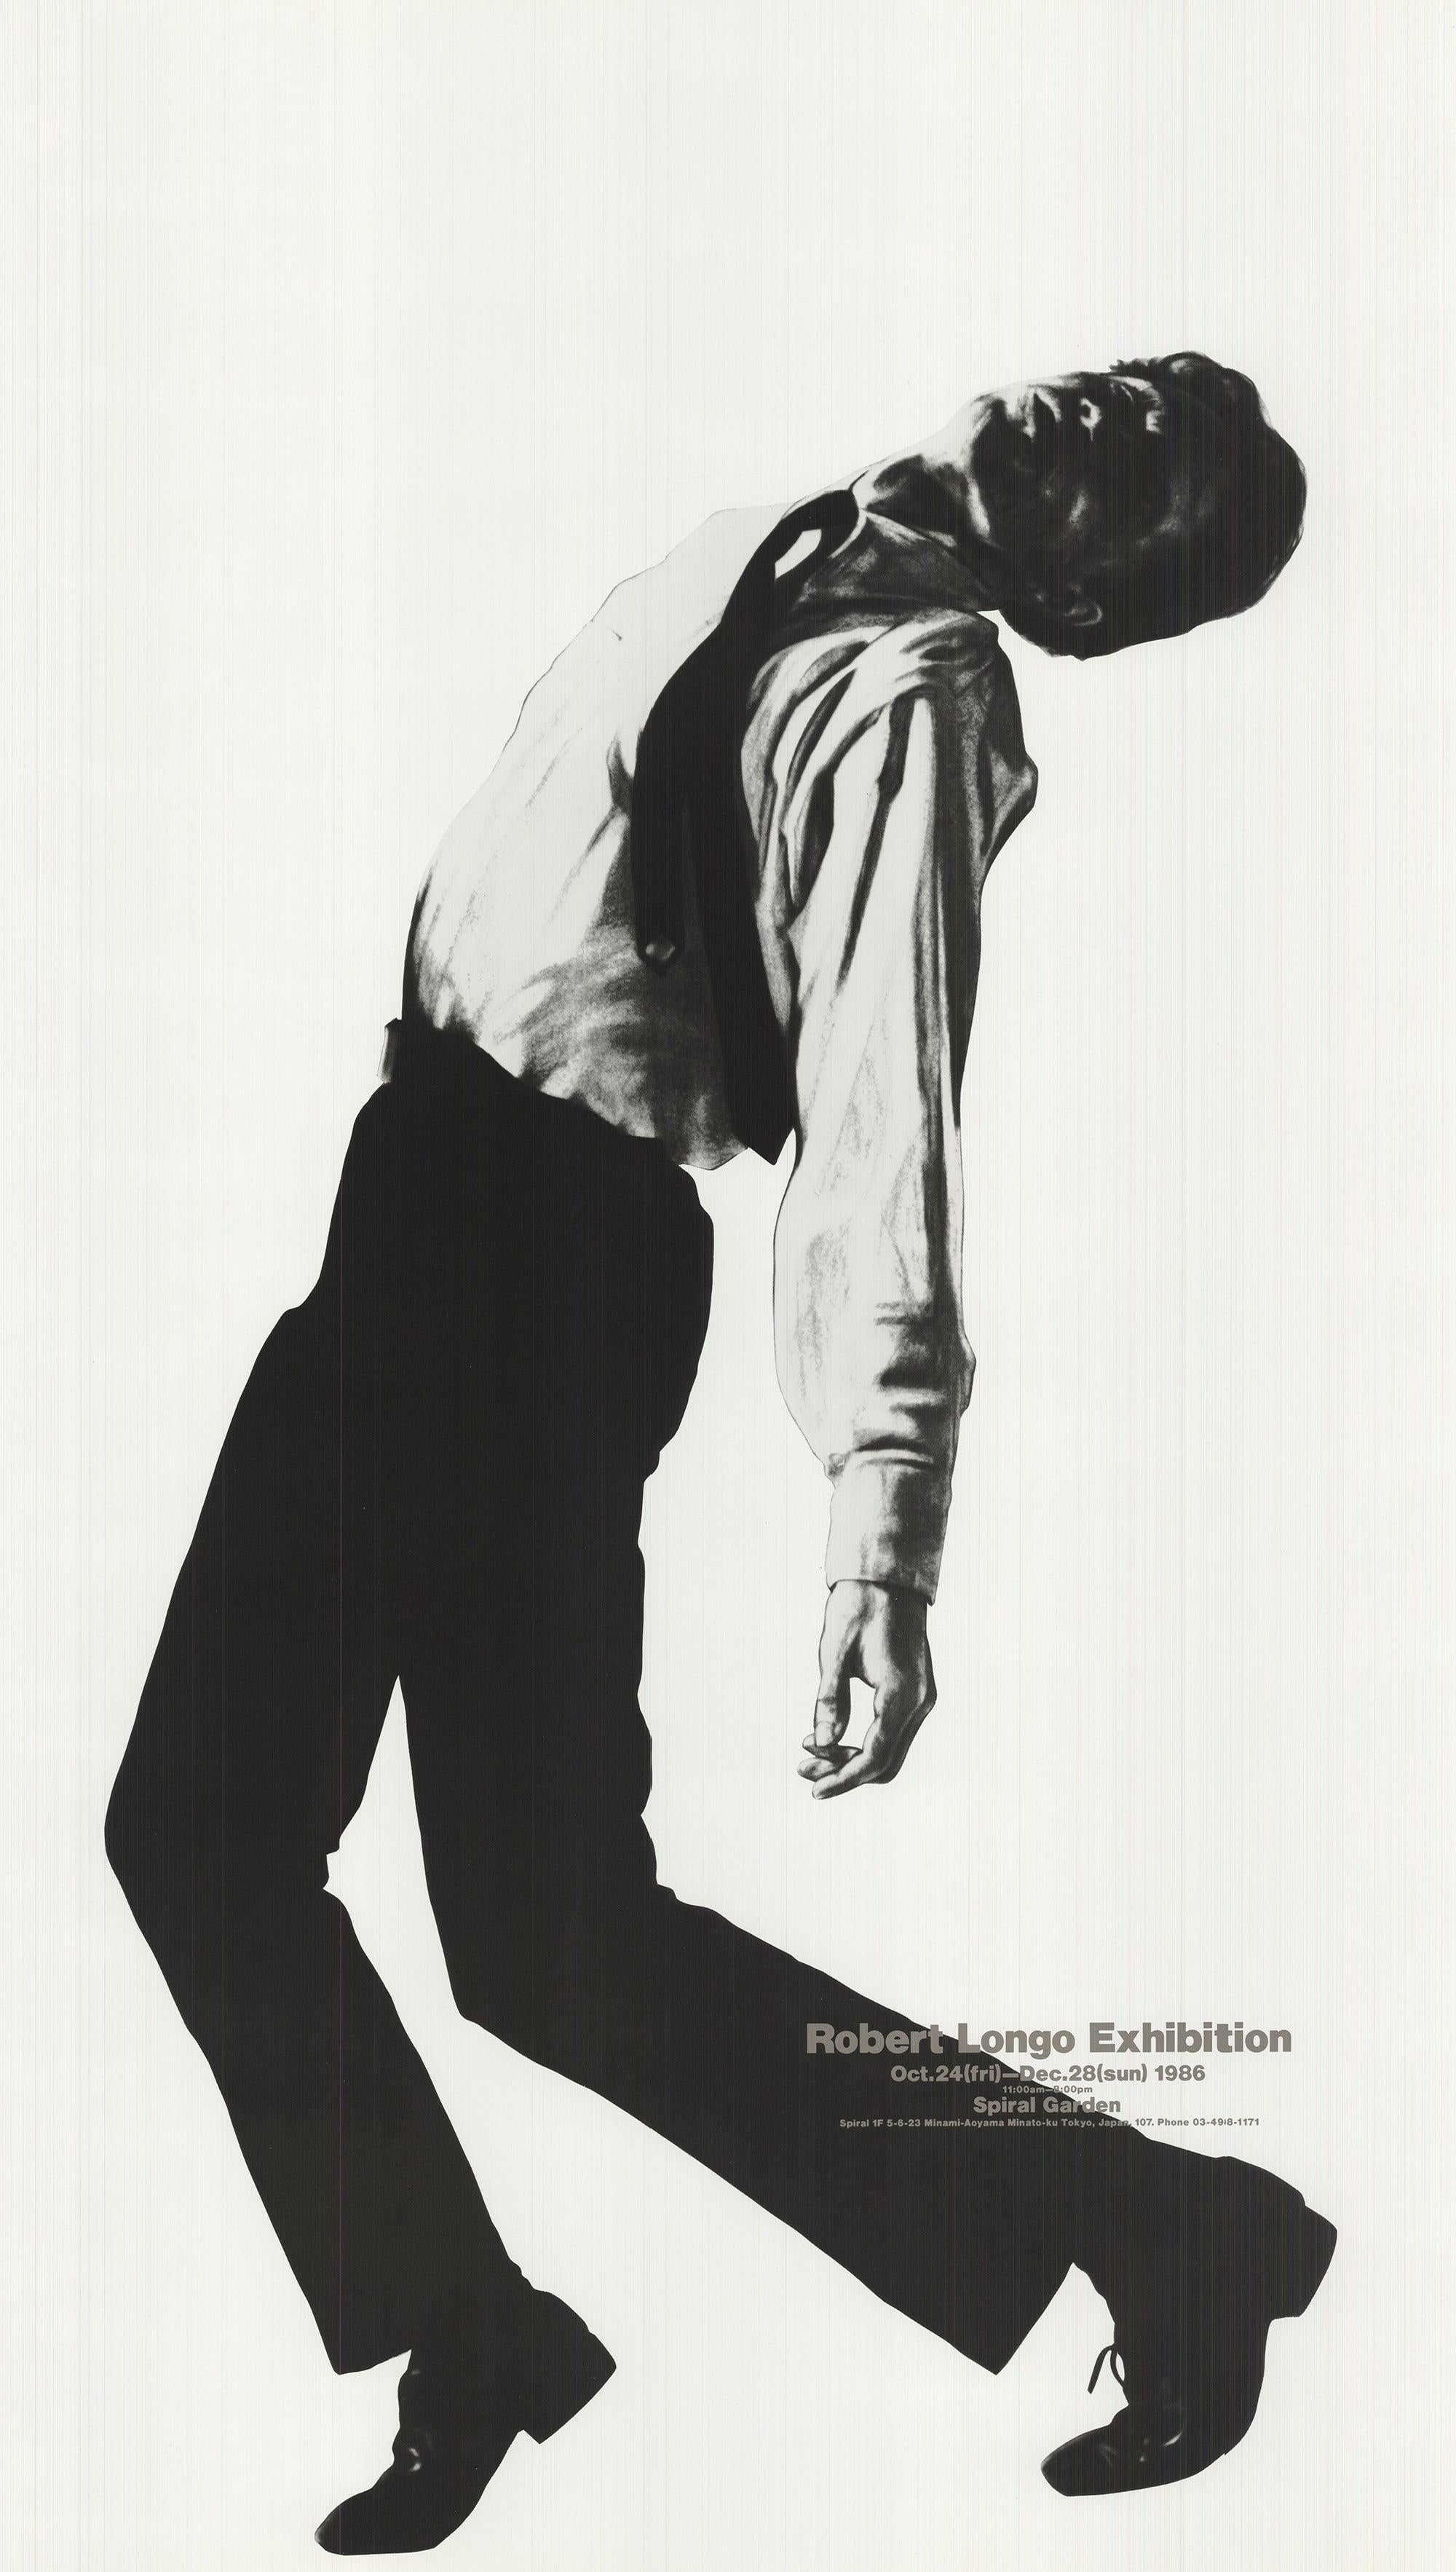 1986 Robert Longo 'Eric 1985' Contemporary Black & White Japan Offset Lithograph 2